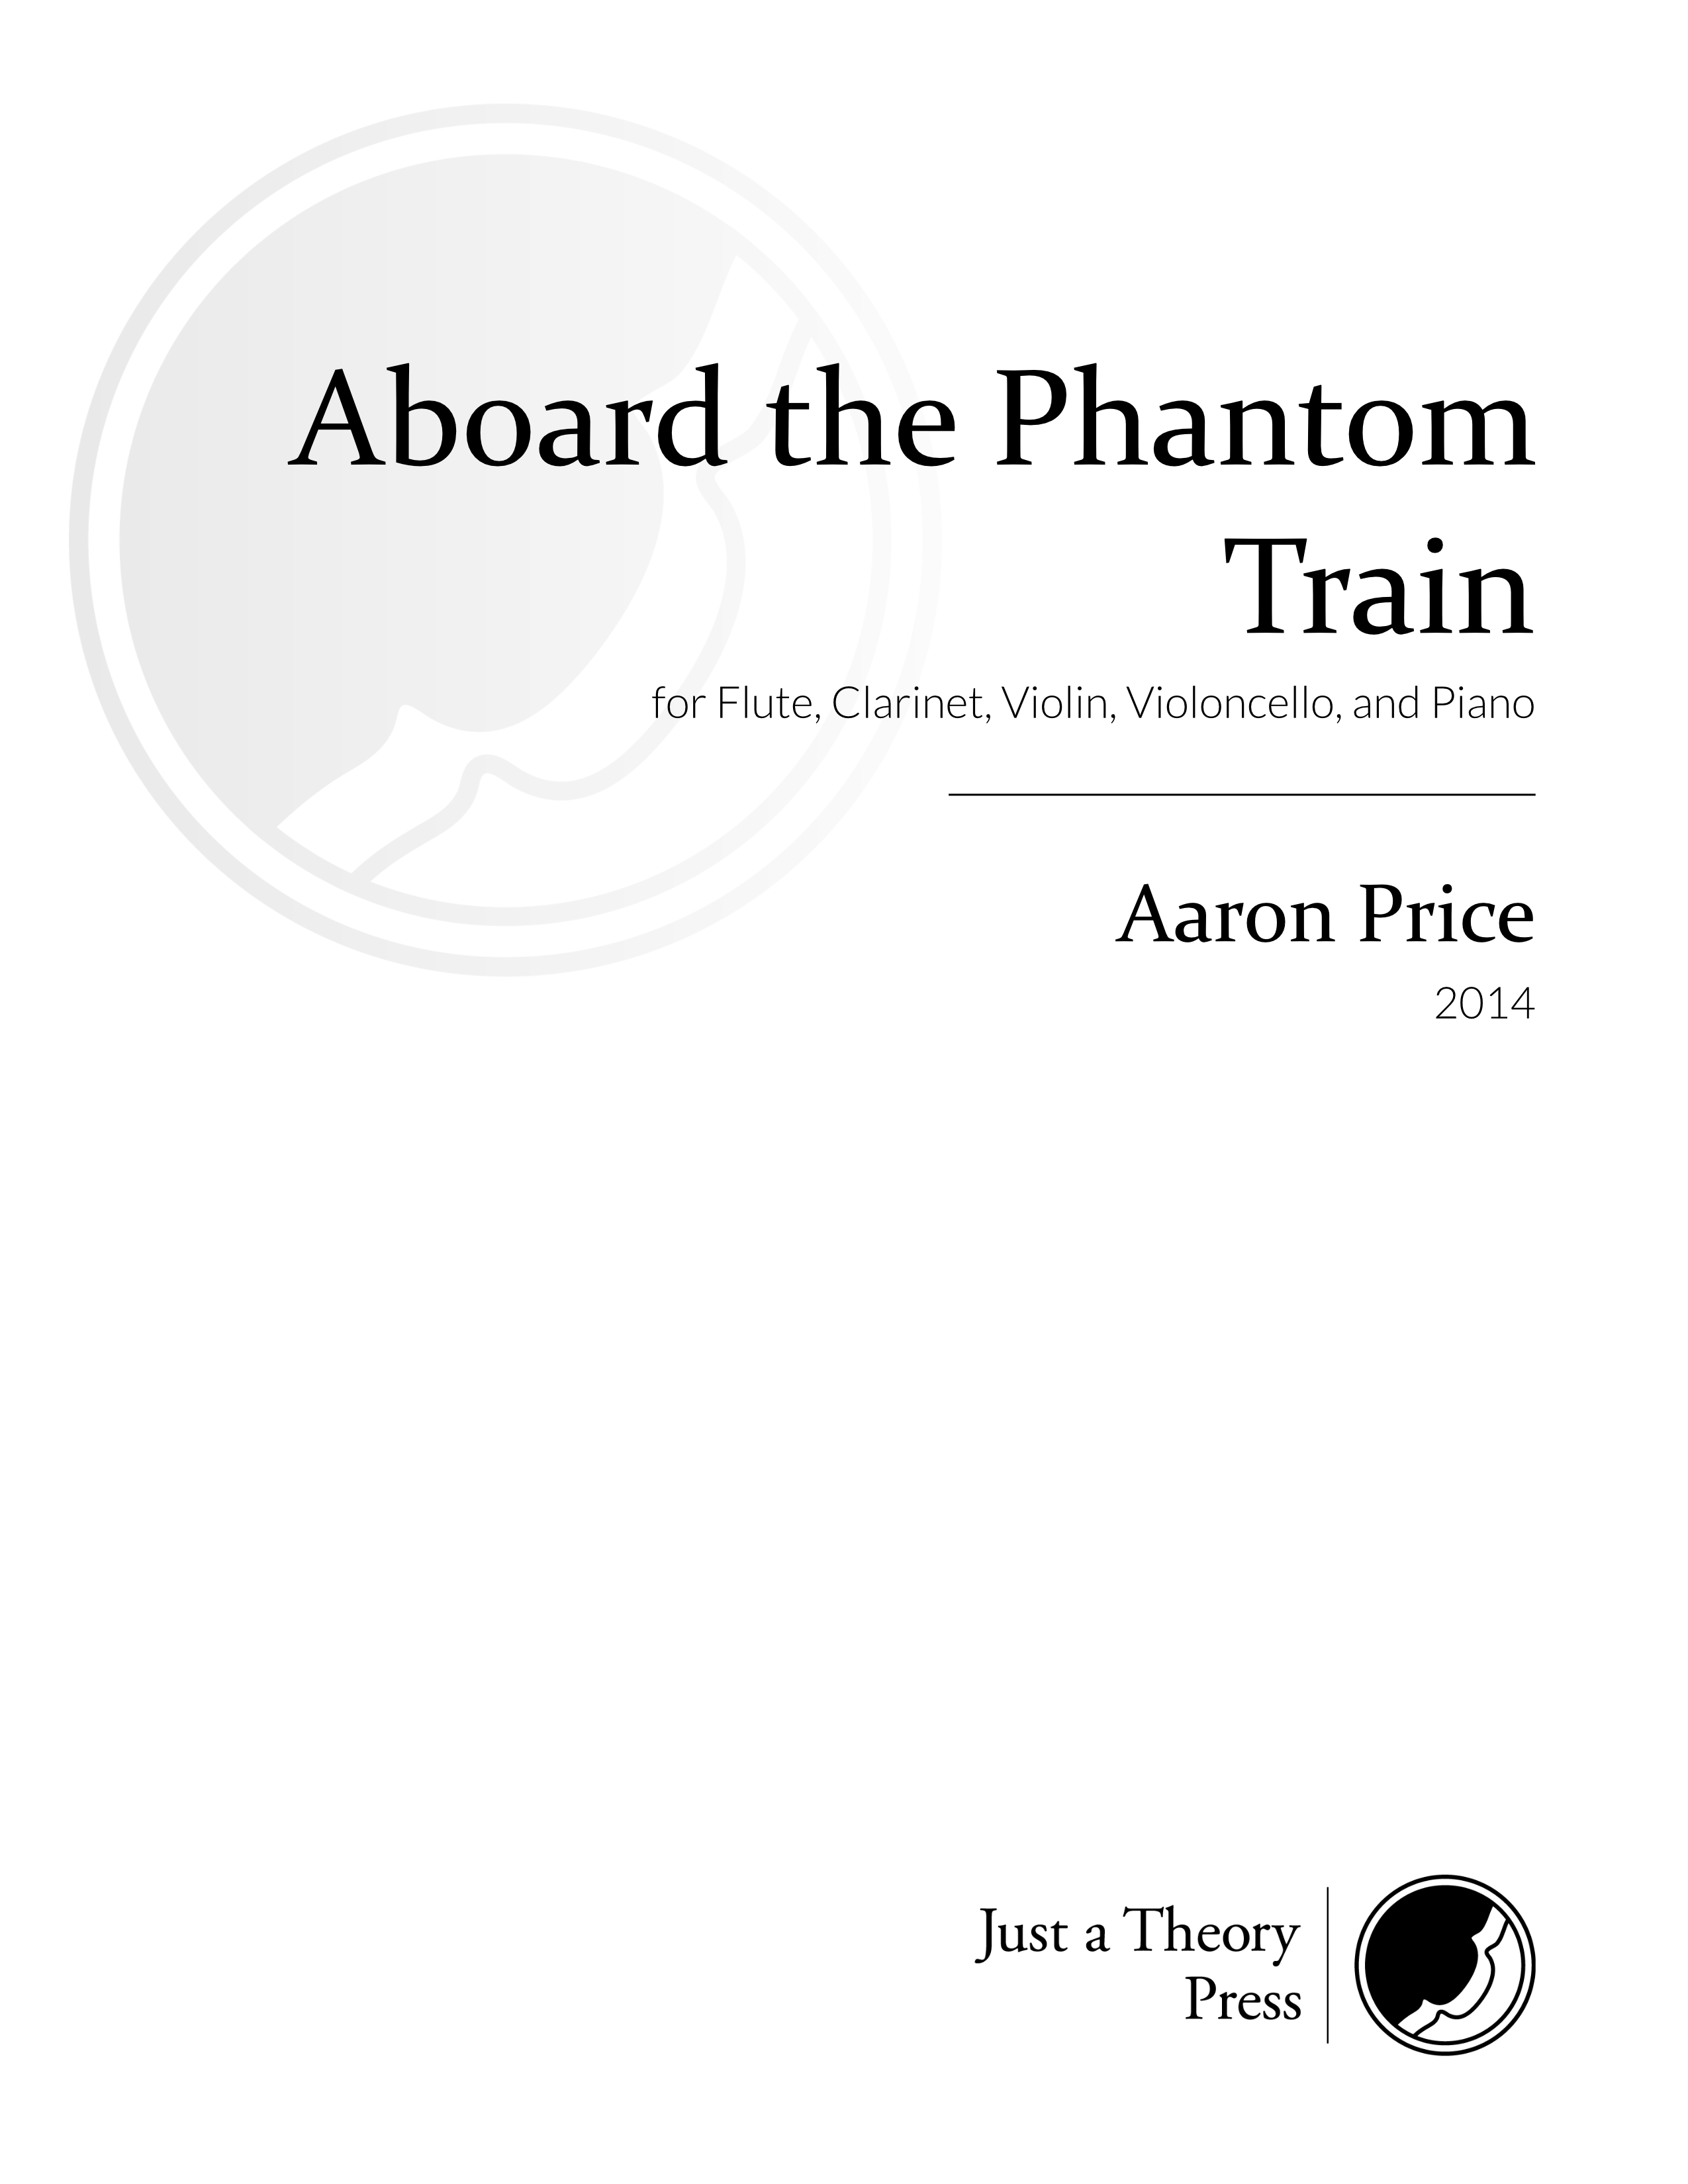 Aboard the Phantom Train